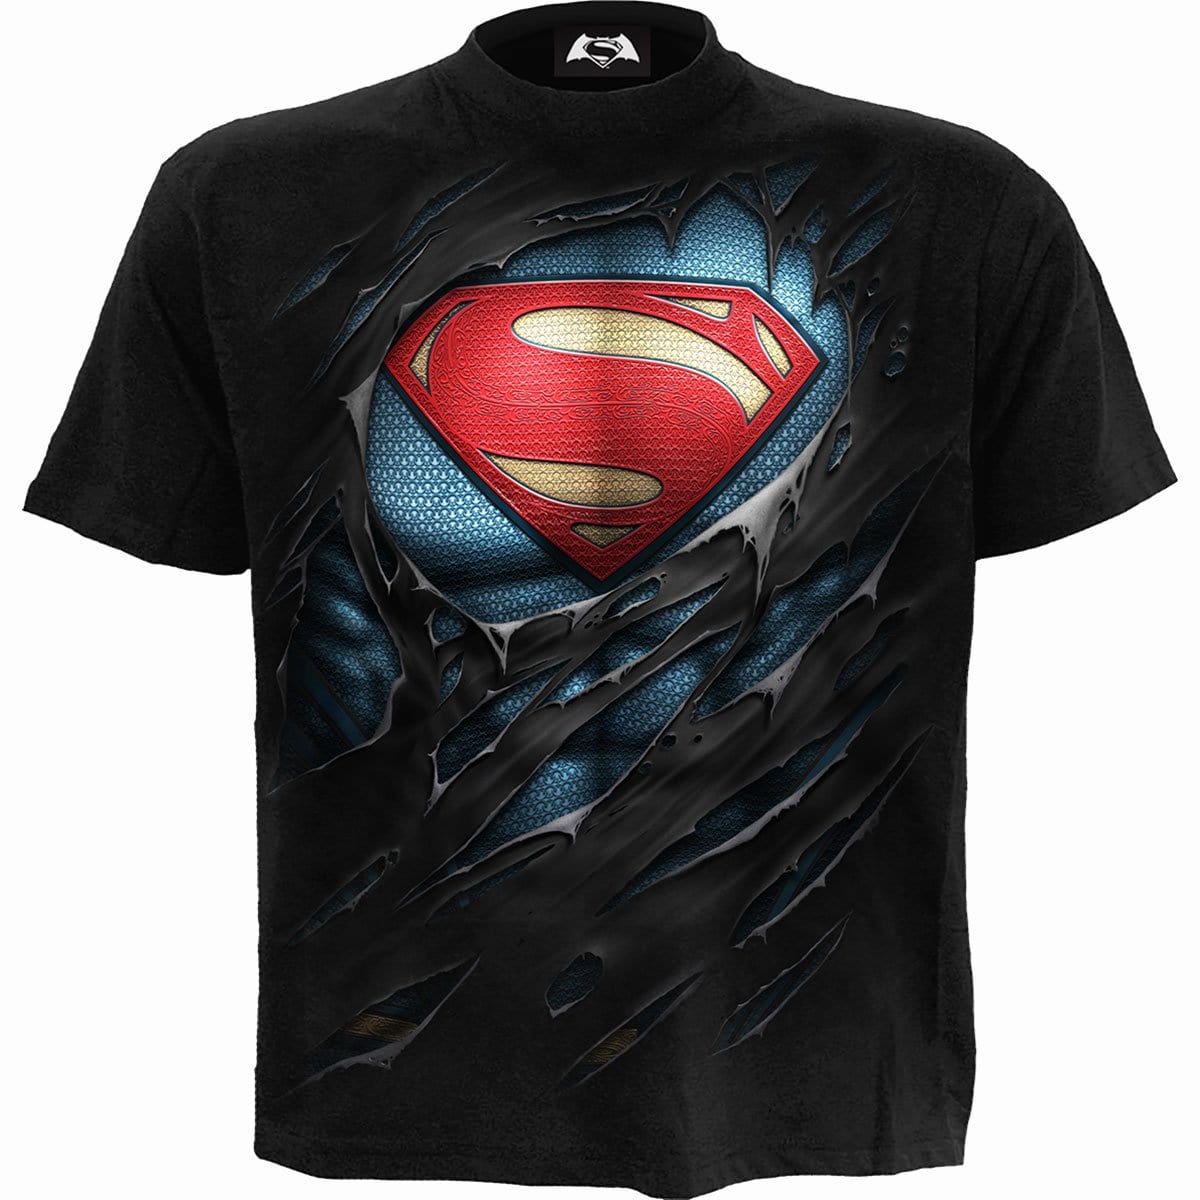 Leeg de prullenbak Wanorde campagne SUPERMAN - RIPPED - T-Shirt Black